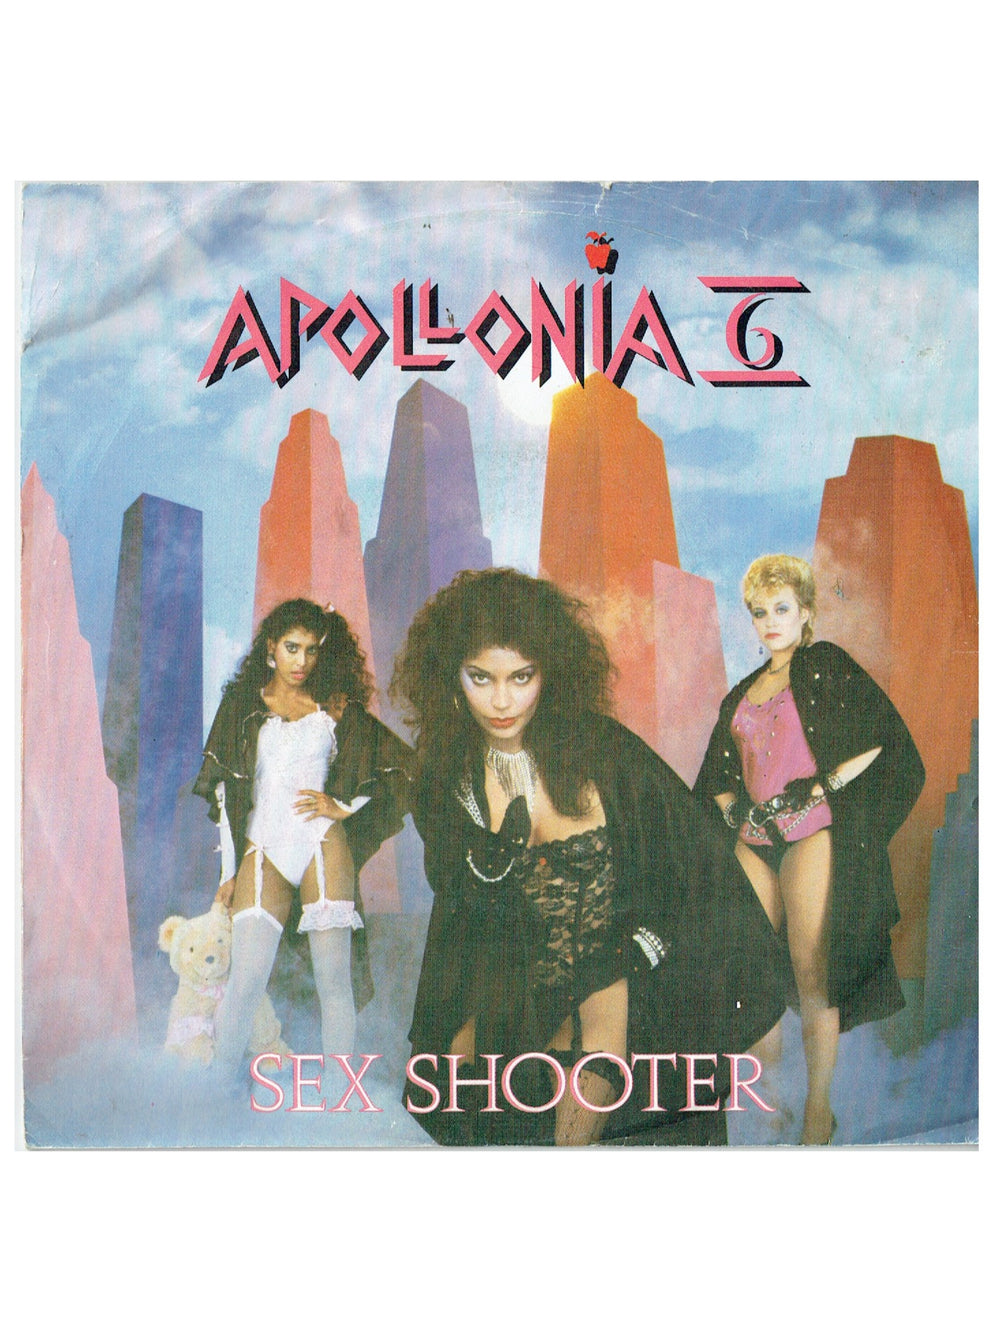 Prince – Apollonia 6 Sex Shooter 7 Inch Vinyl Single German Release Prince